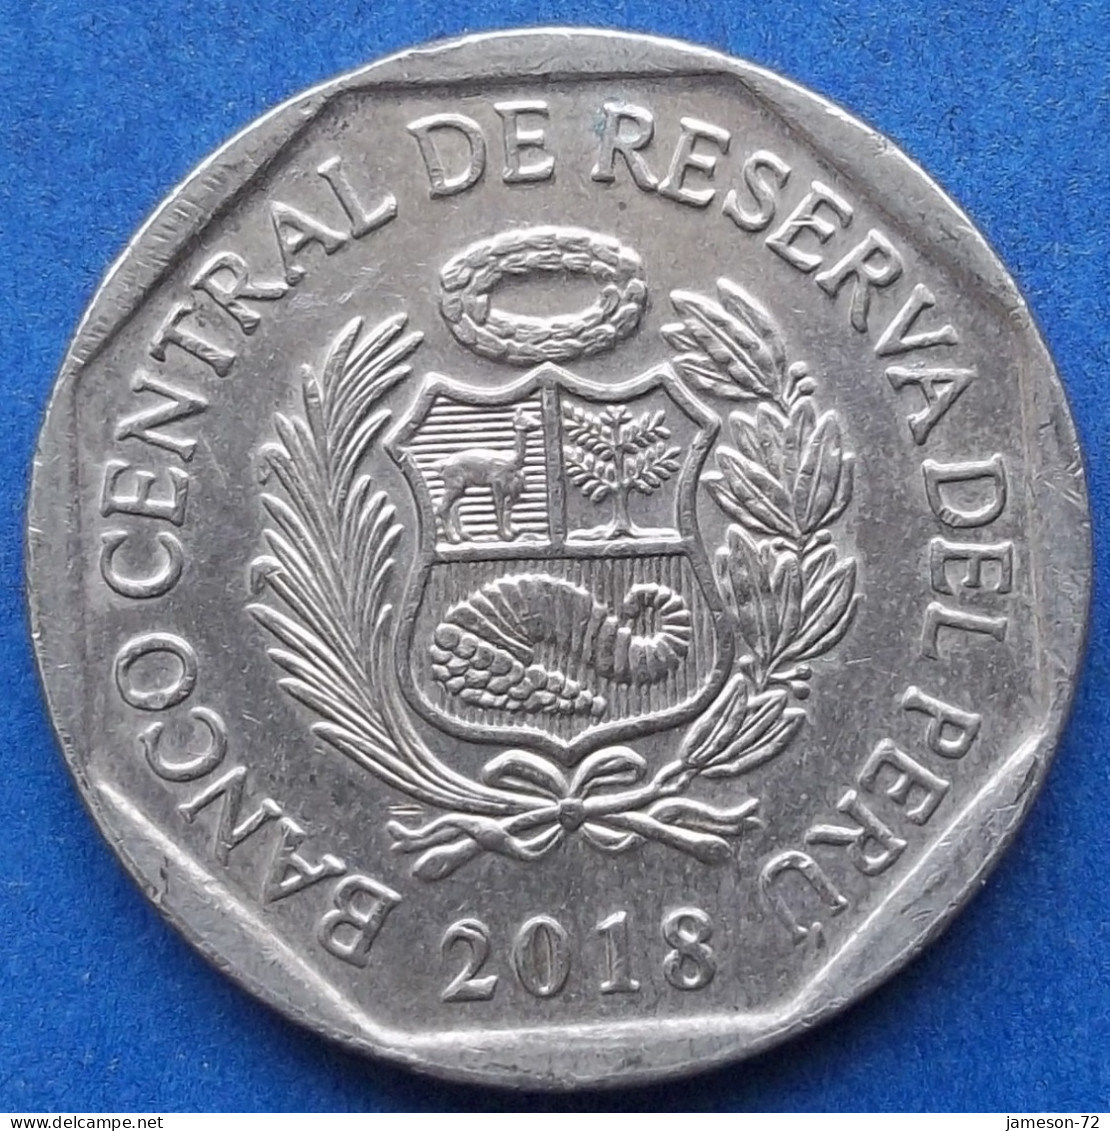 PERU - 1 Sol 2018 "Andean Tapir" KM# 409 Monetary Reform (1991) - Edelweiss Coins - Peru